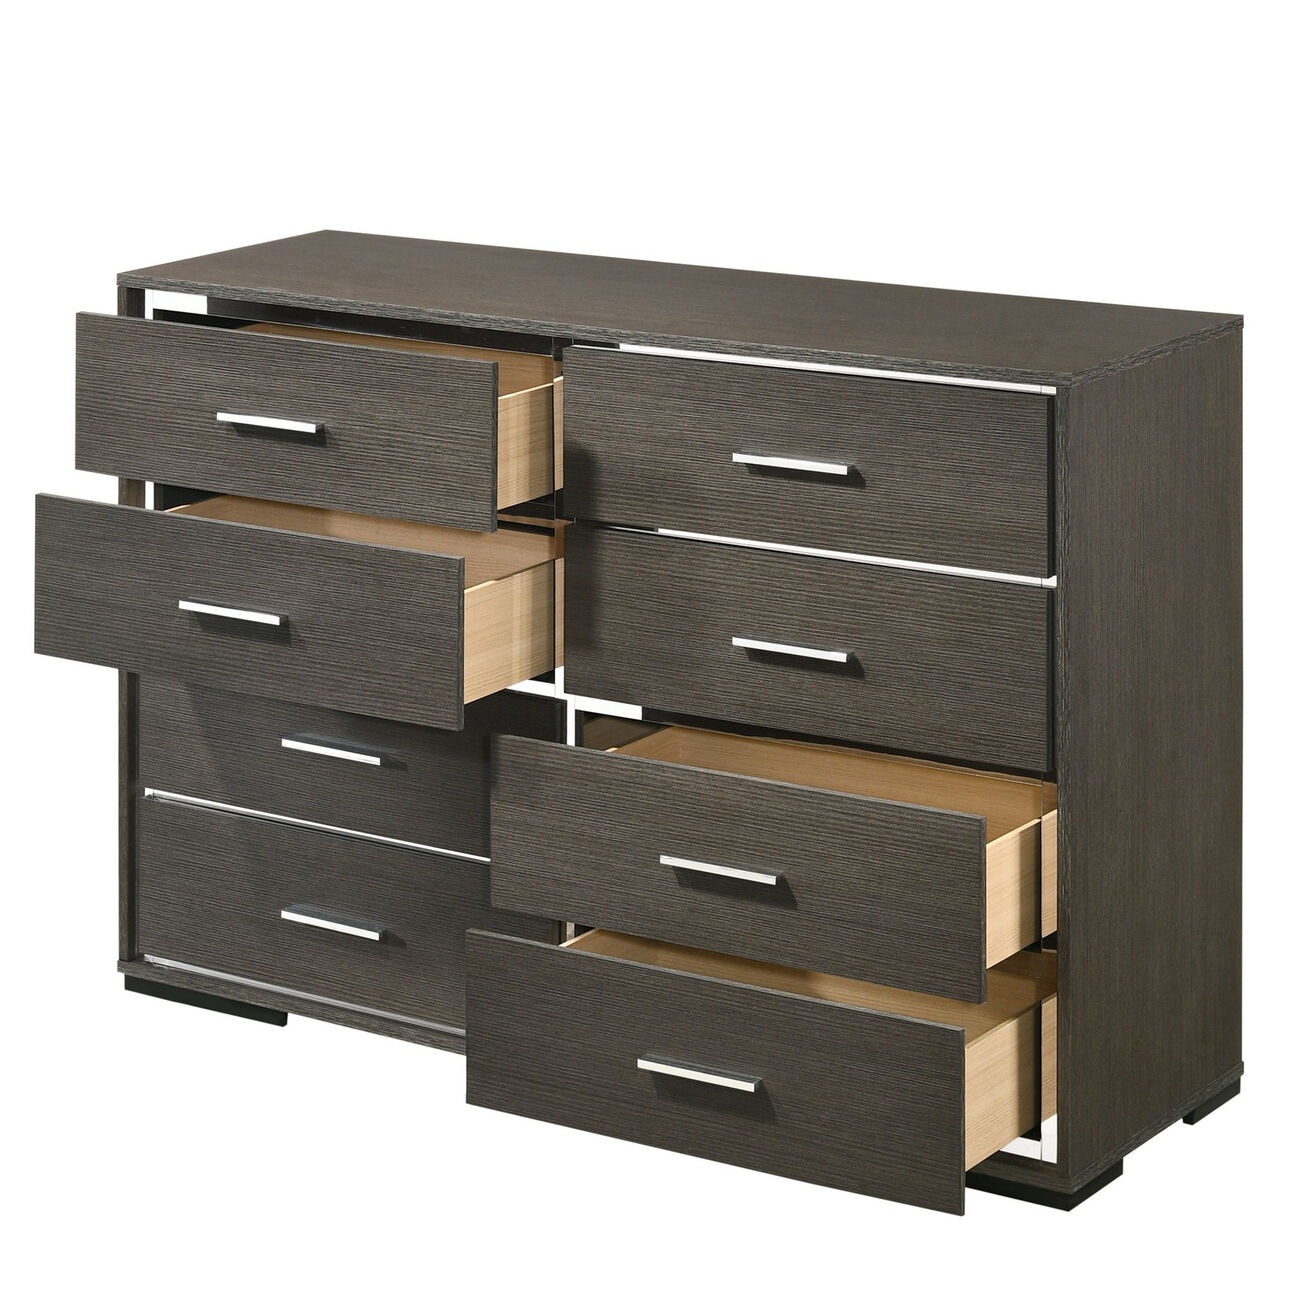 8 Drawer Wooden Dresser with Mirror Trim Accents, Gray